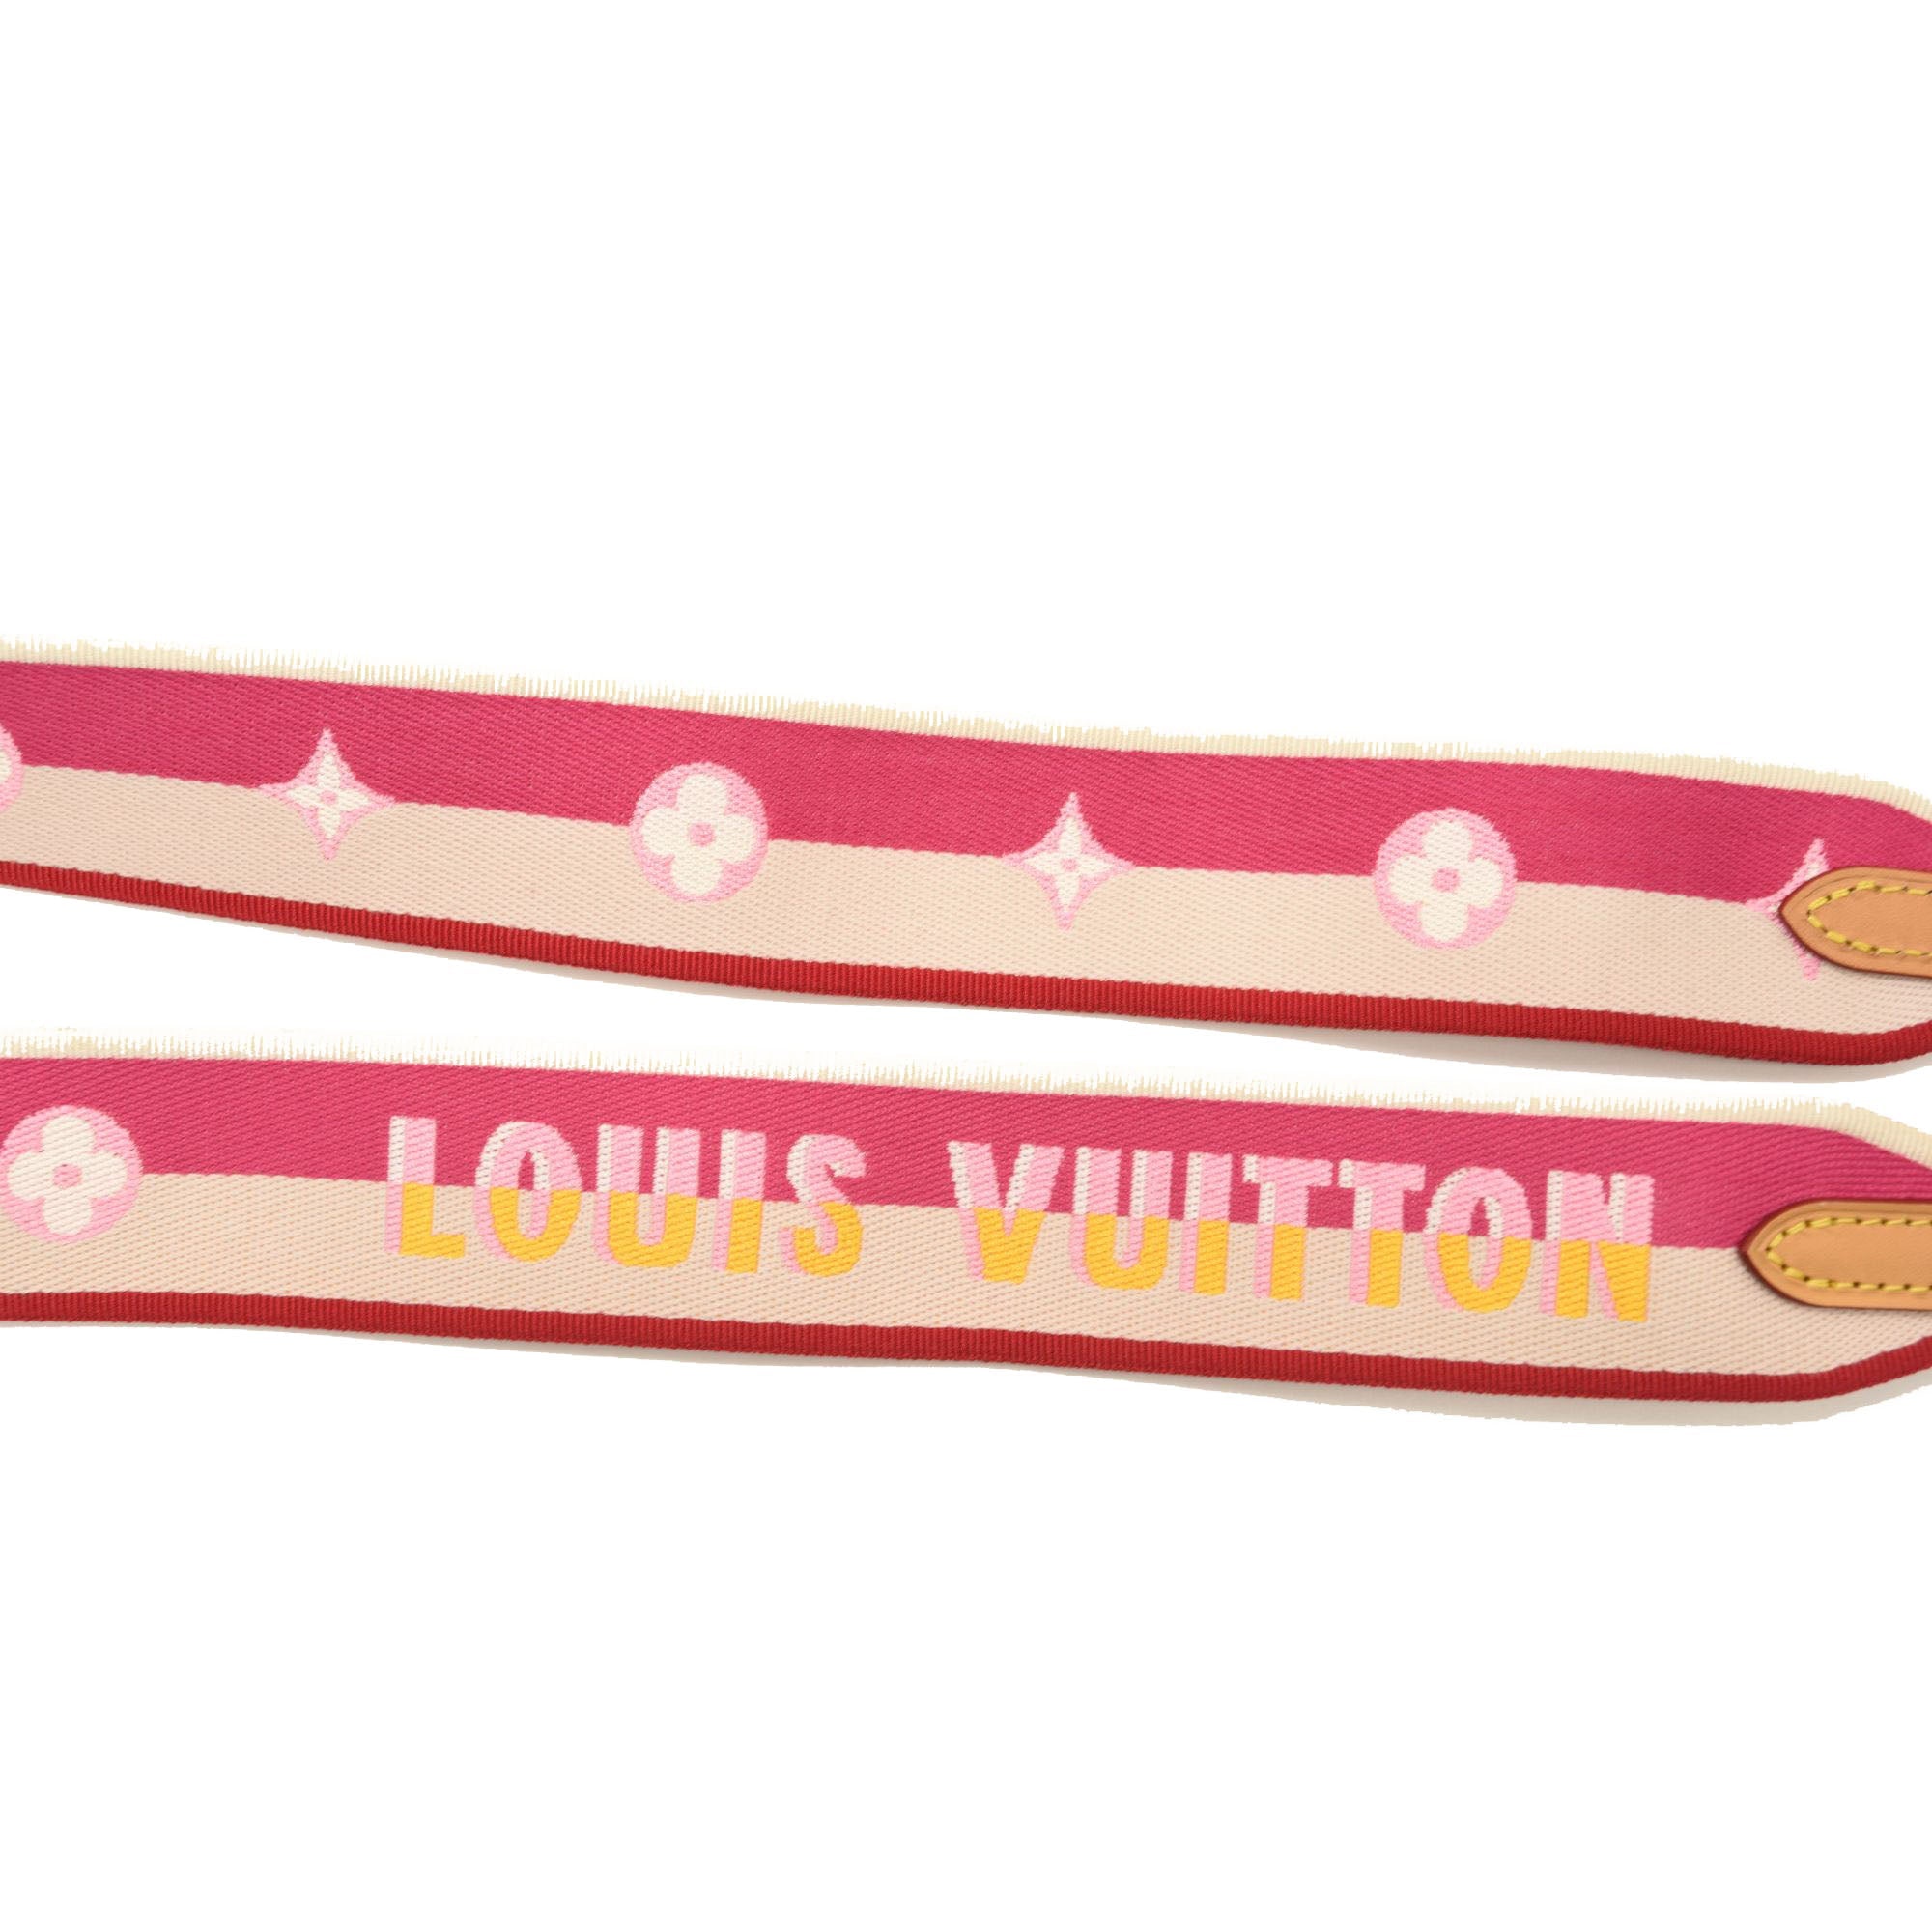 Brand new Louis Vuitton speedy 20 in monogram jacquard strap